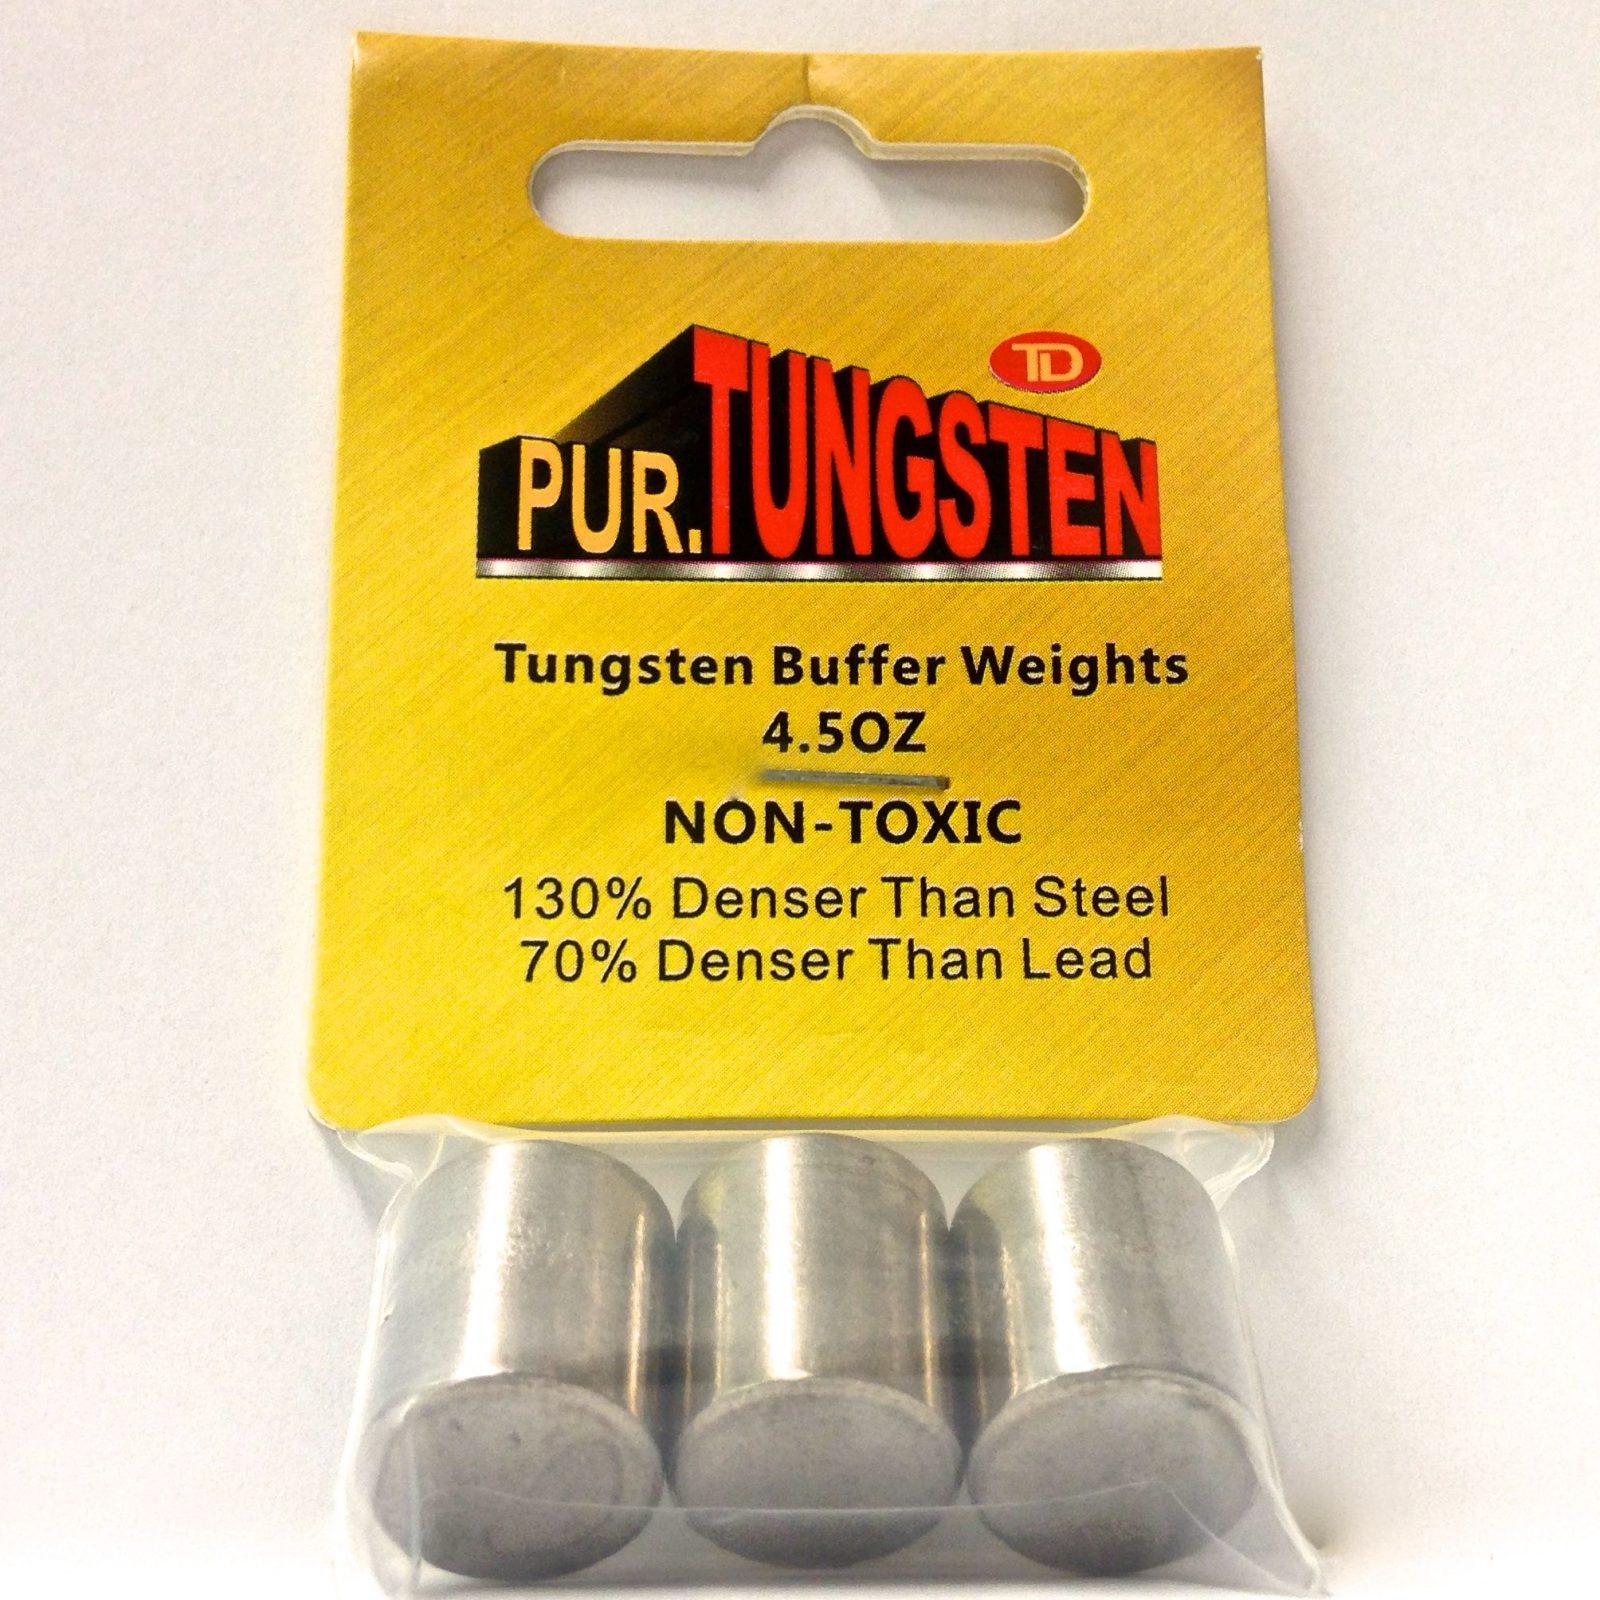 Pur.Tungsten Archives - Shop Pur-Tungsten for Top Quality Tungsten goods